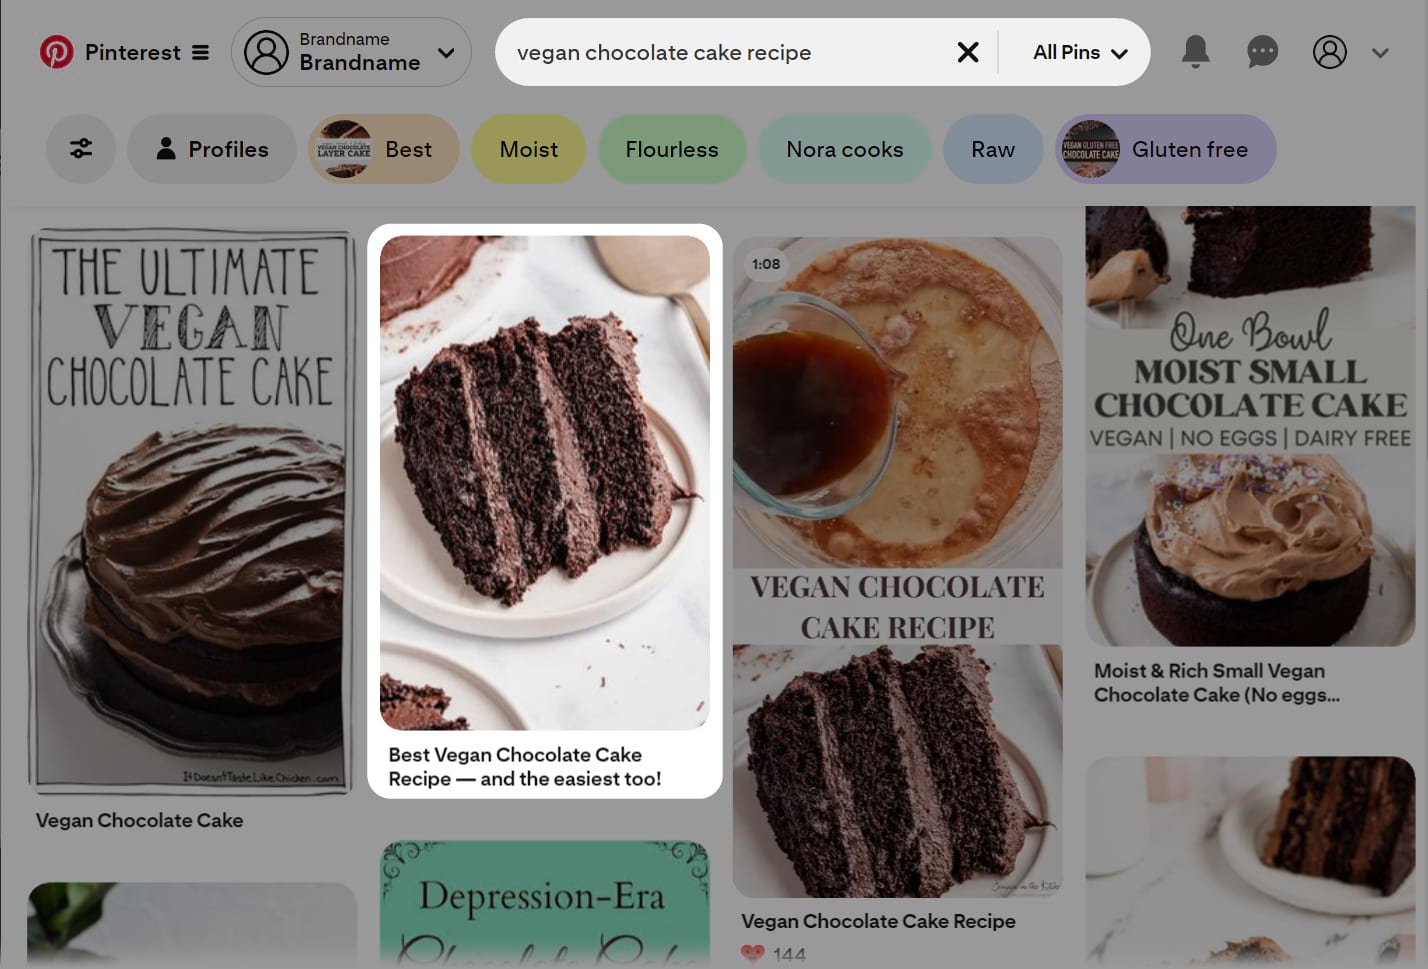 Pinterest hunt  results for “vegan cocoa  barroom   recipe” showing keyword-optimized titles.